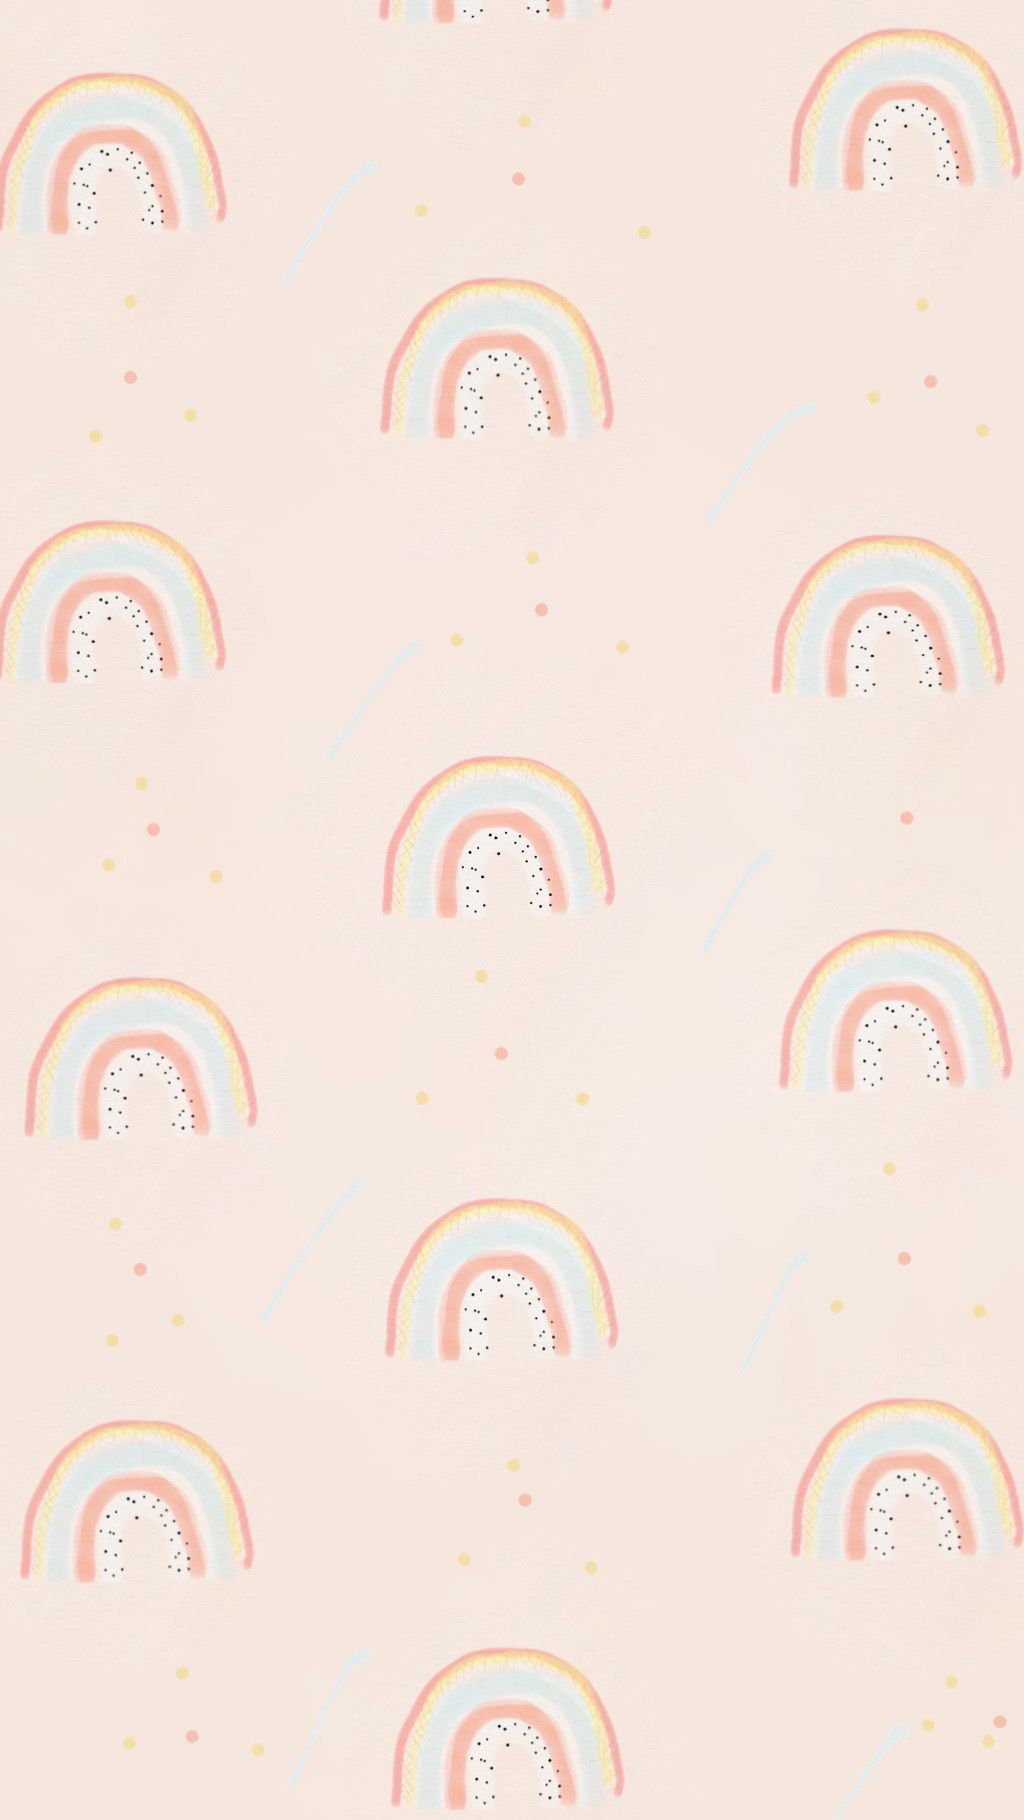 Rainbow wallpaper background. Rainbow wallpaper background, Rainbow wallpaper, Aesthetic iphone wallpaper